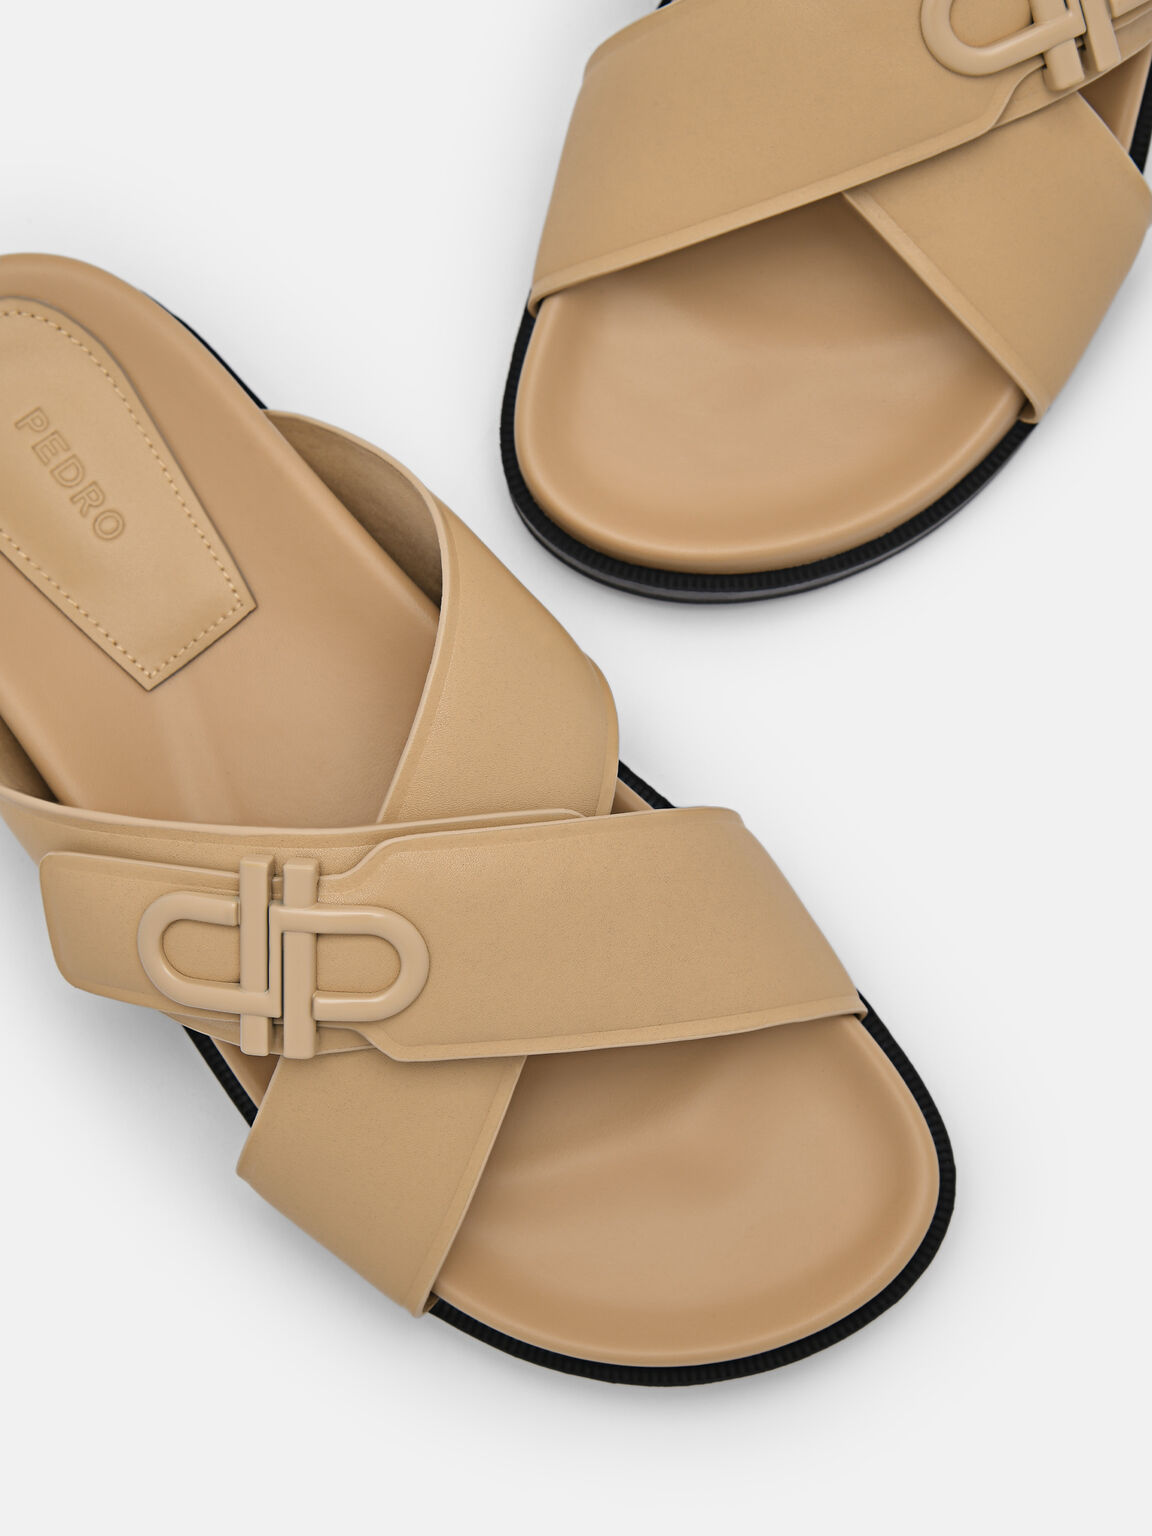 PEDRO Icon Cross Sandals, Nude, hi-res